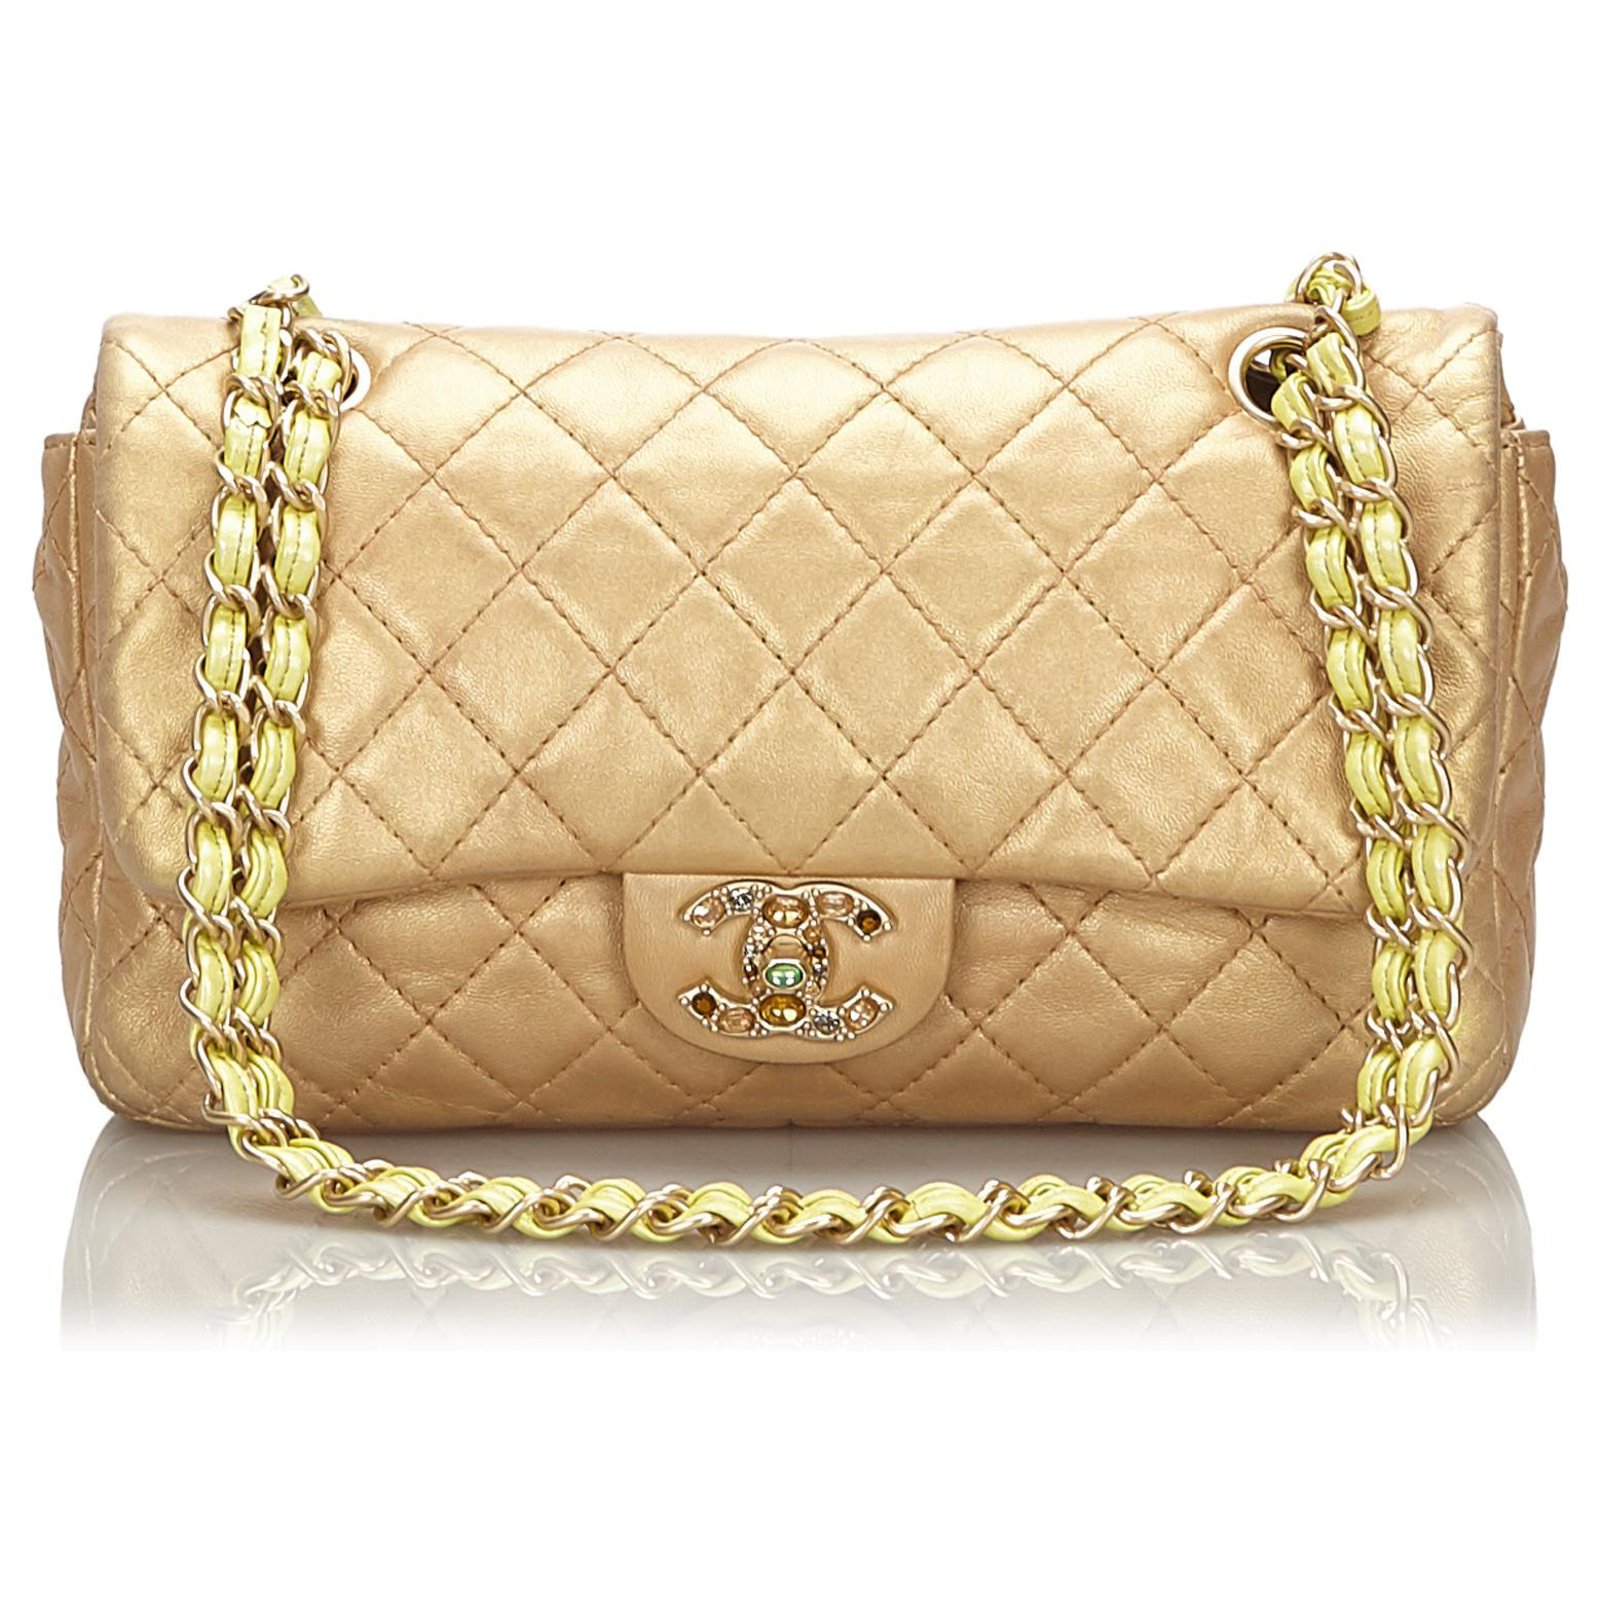 Chanel Gold Medium Lambskin Precious Jewel Single Flap Bag